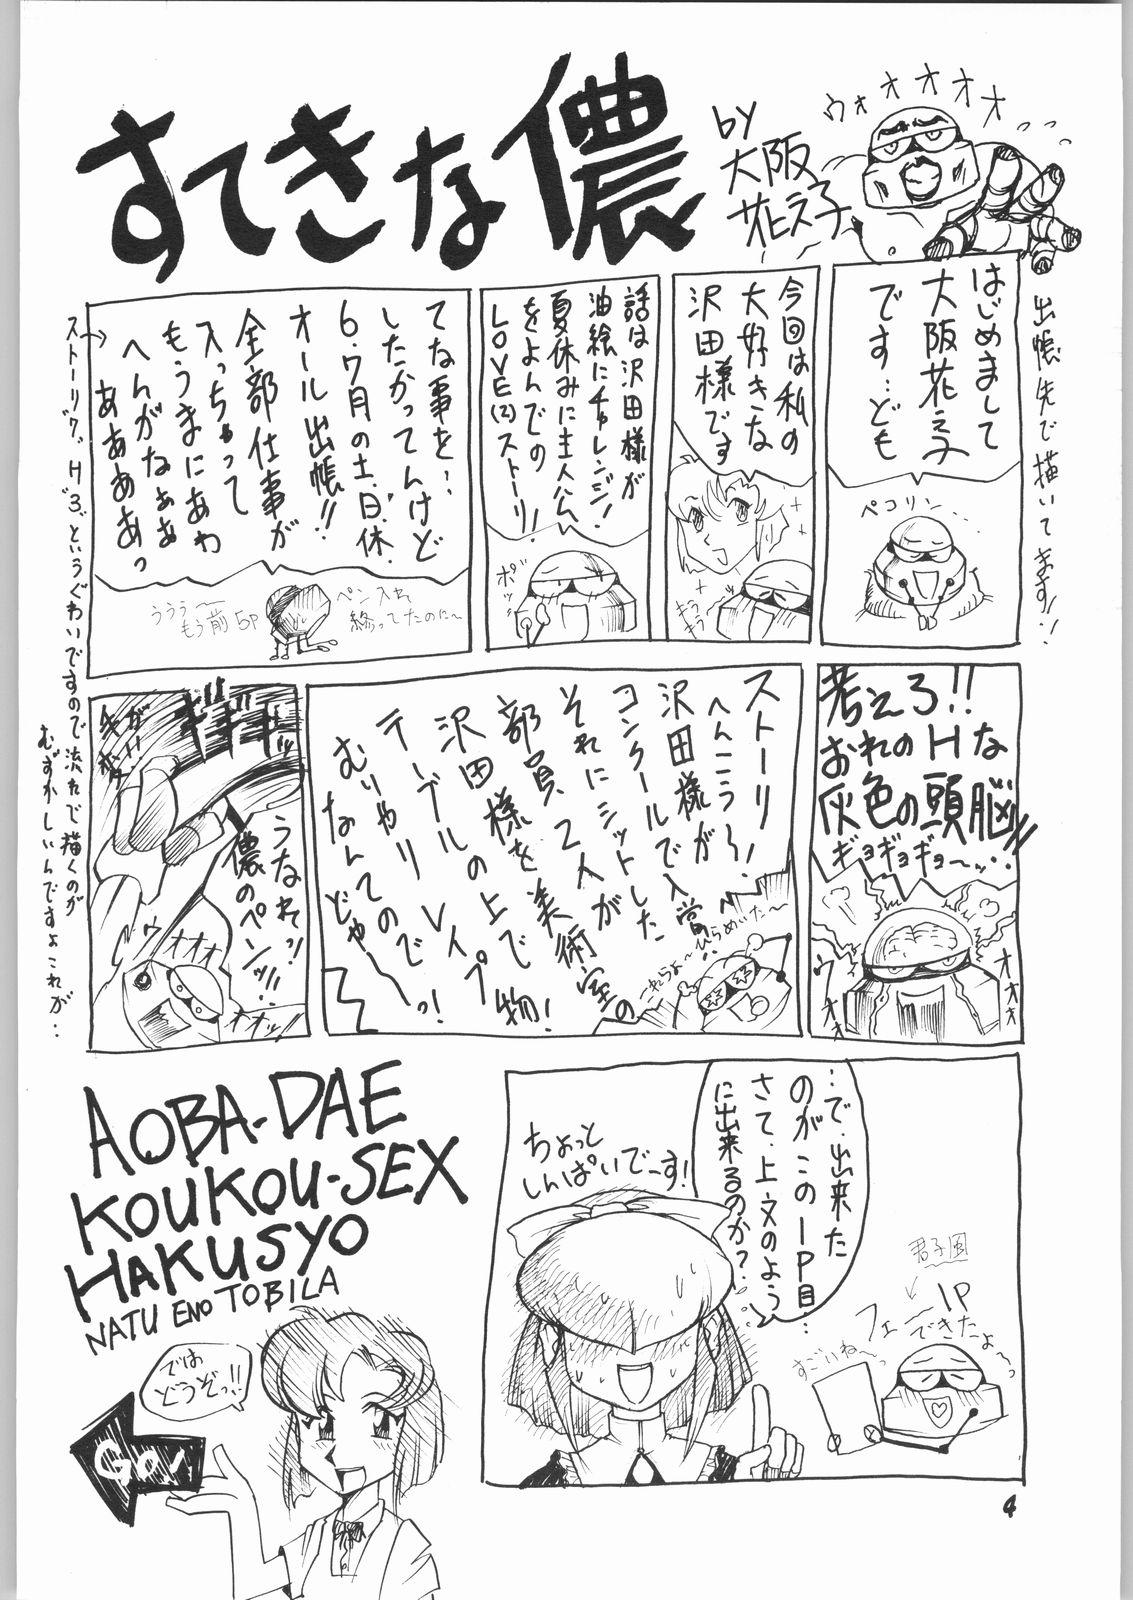 Cocksuckers natsu eno tobira - True love story Wrestling - Page 3